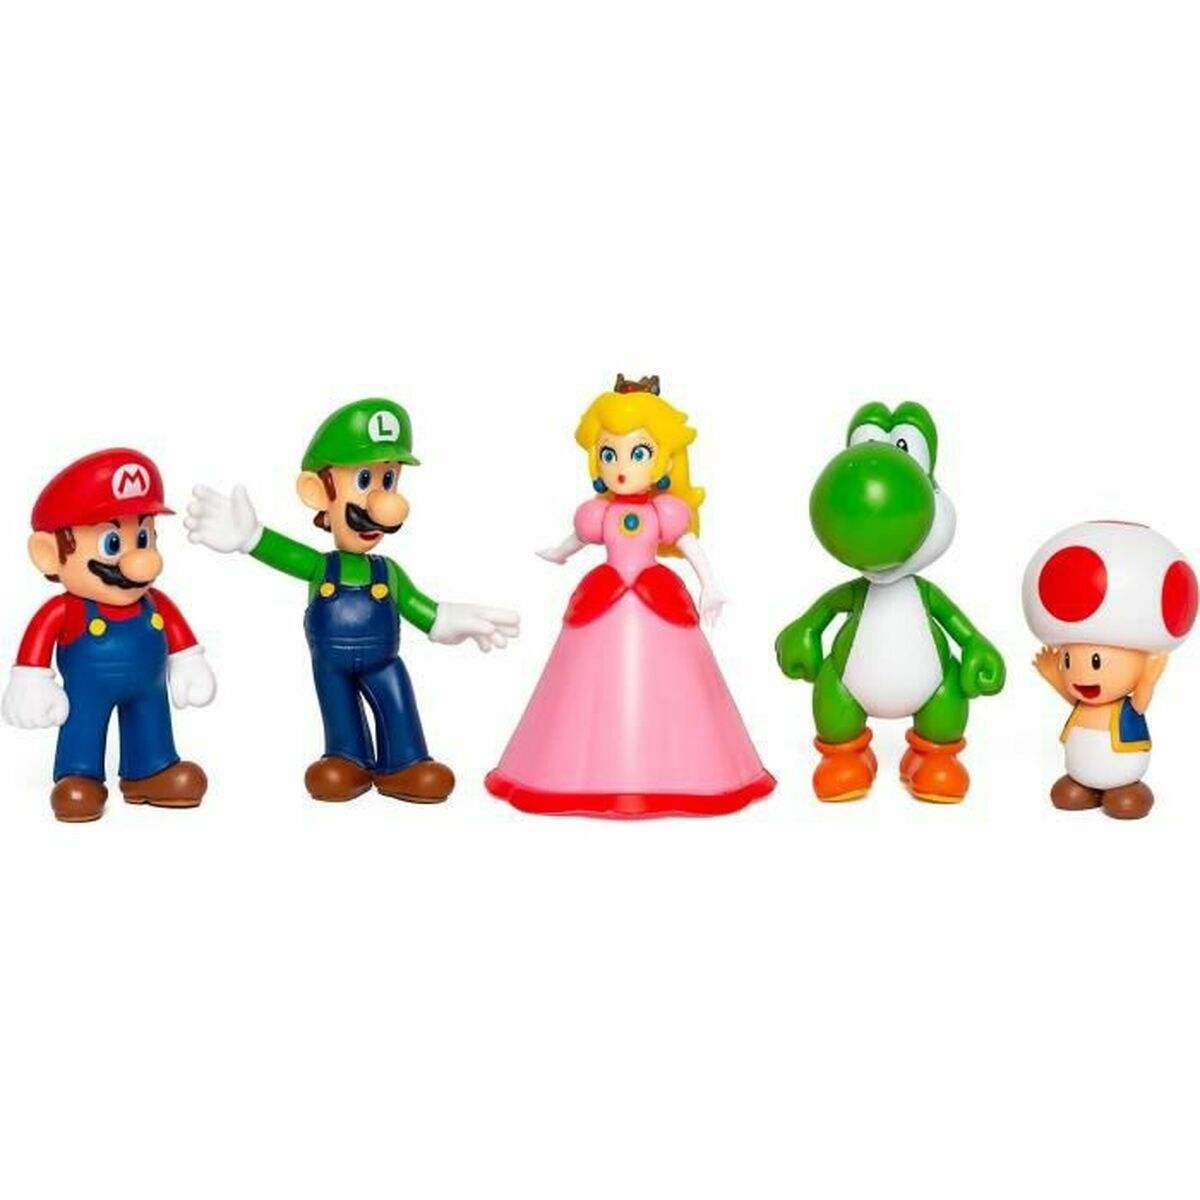 Figurensatz Super Mario Mario and his Friends 5 Stücke